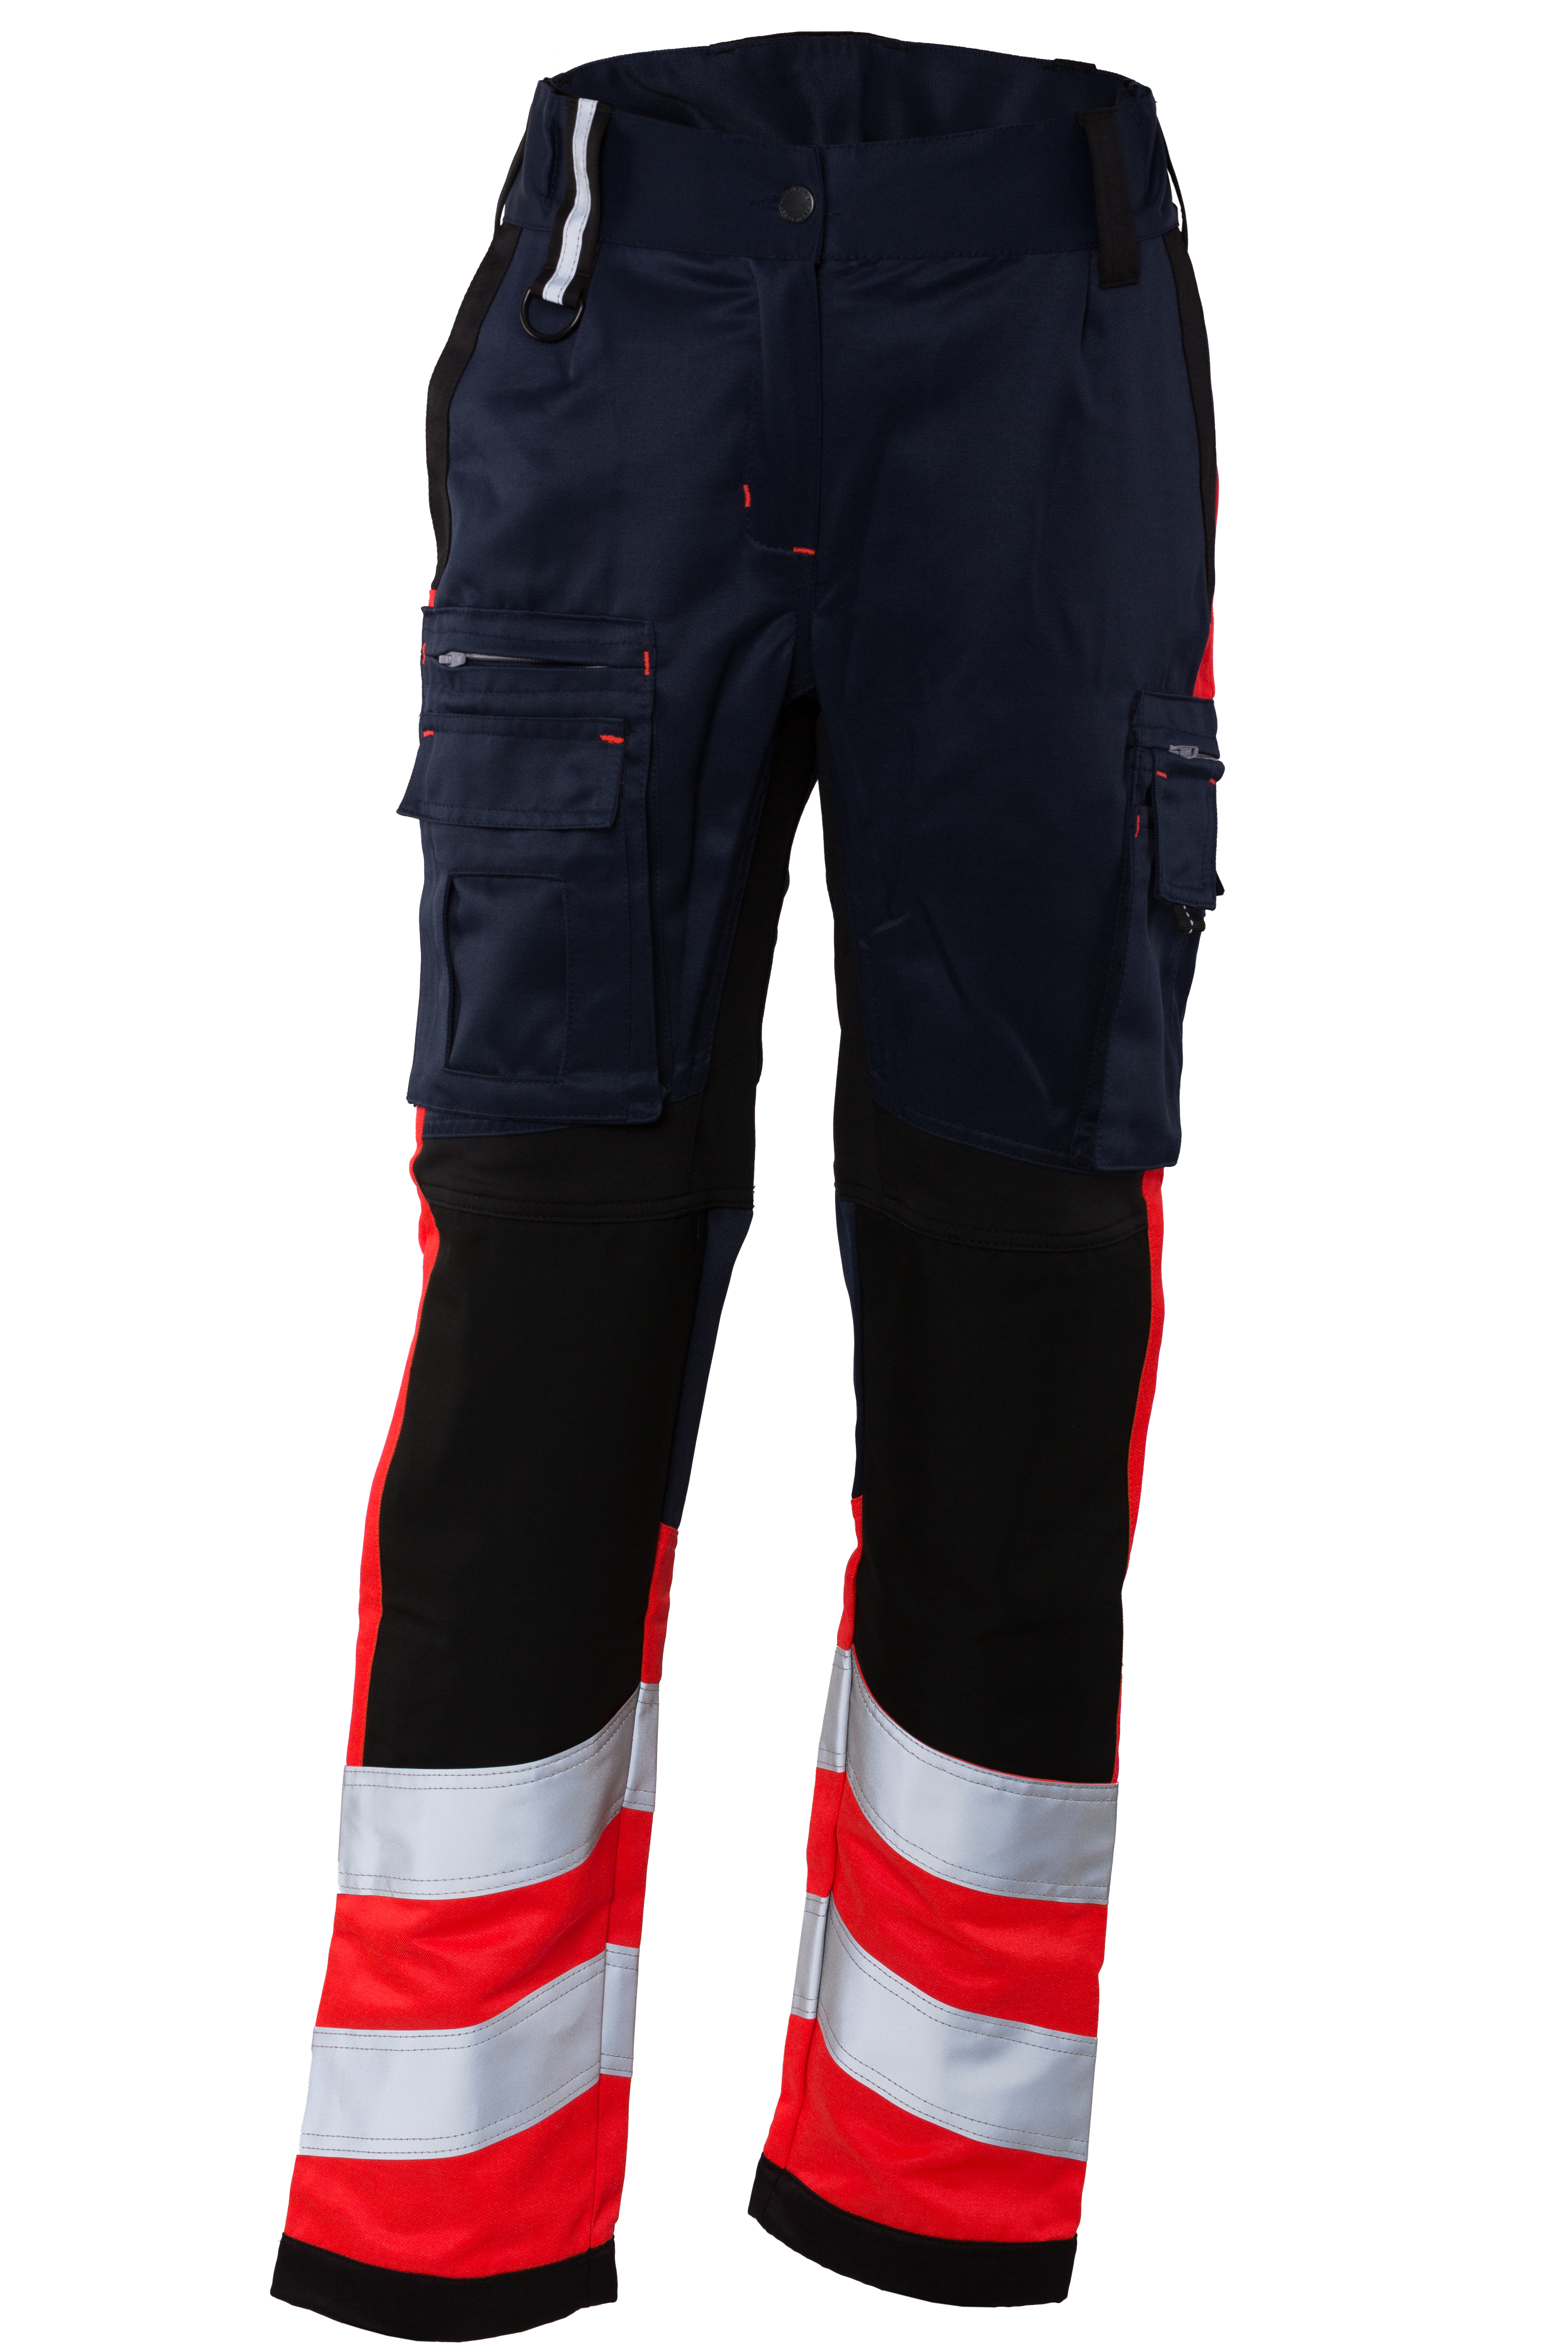 Rescuewear Damen Hose Stretch HiVis Klasse 1 Marineblau / Schwarz / Neon Rot  - 36